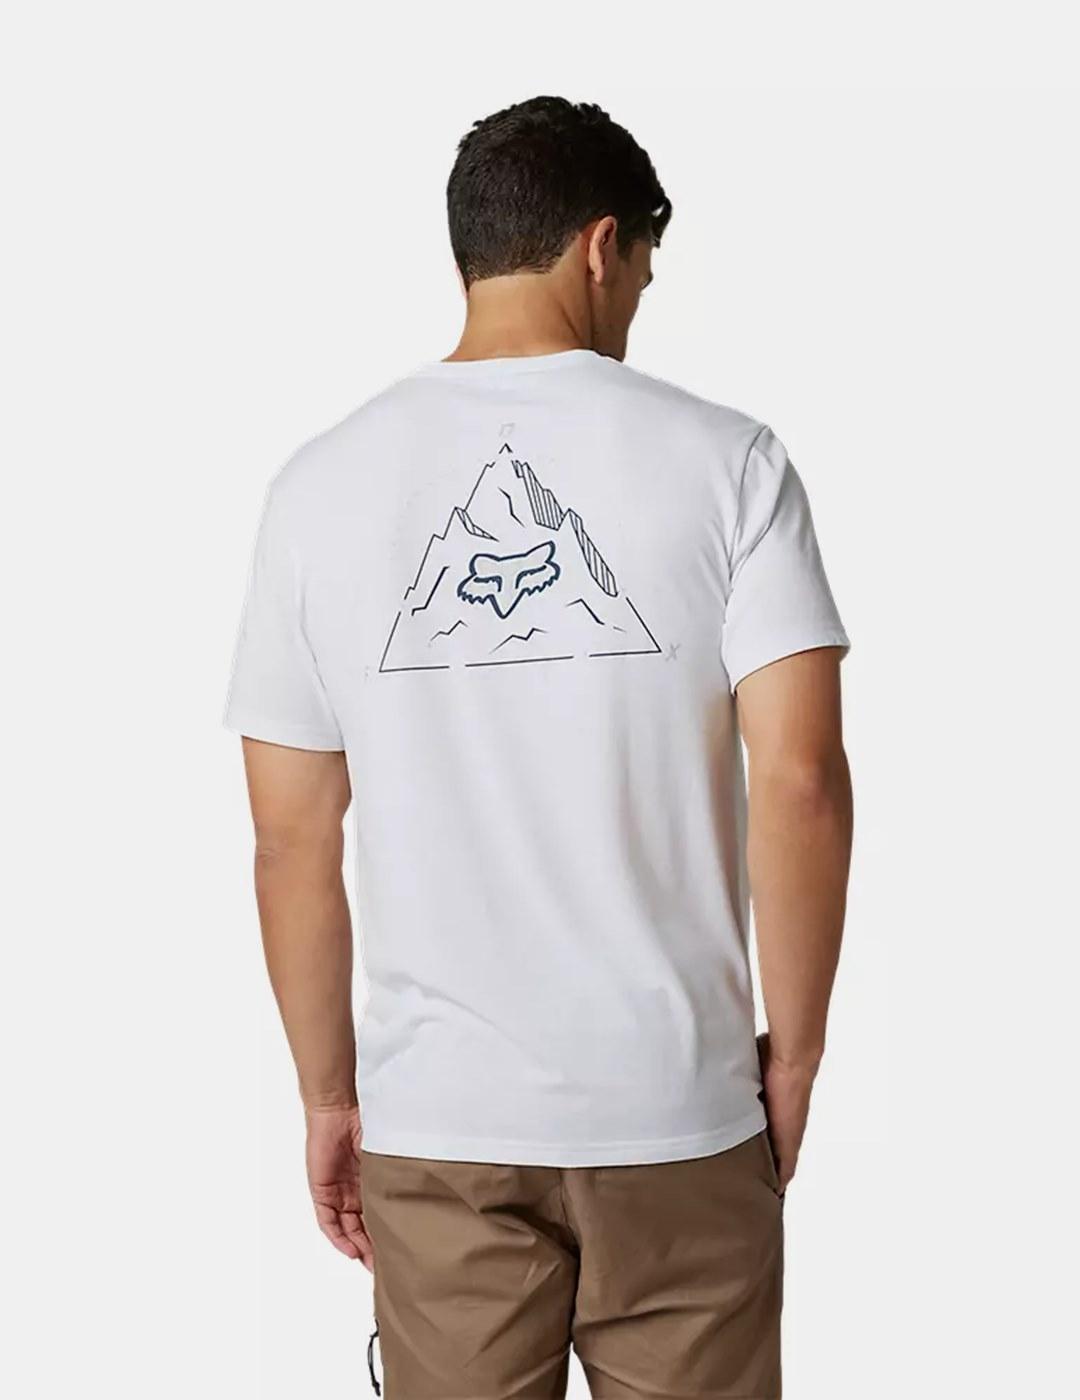 Camiseta Fox Finisher Tech Reflect Blanco Para Hombre